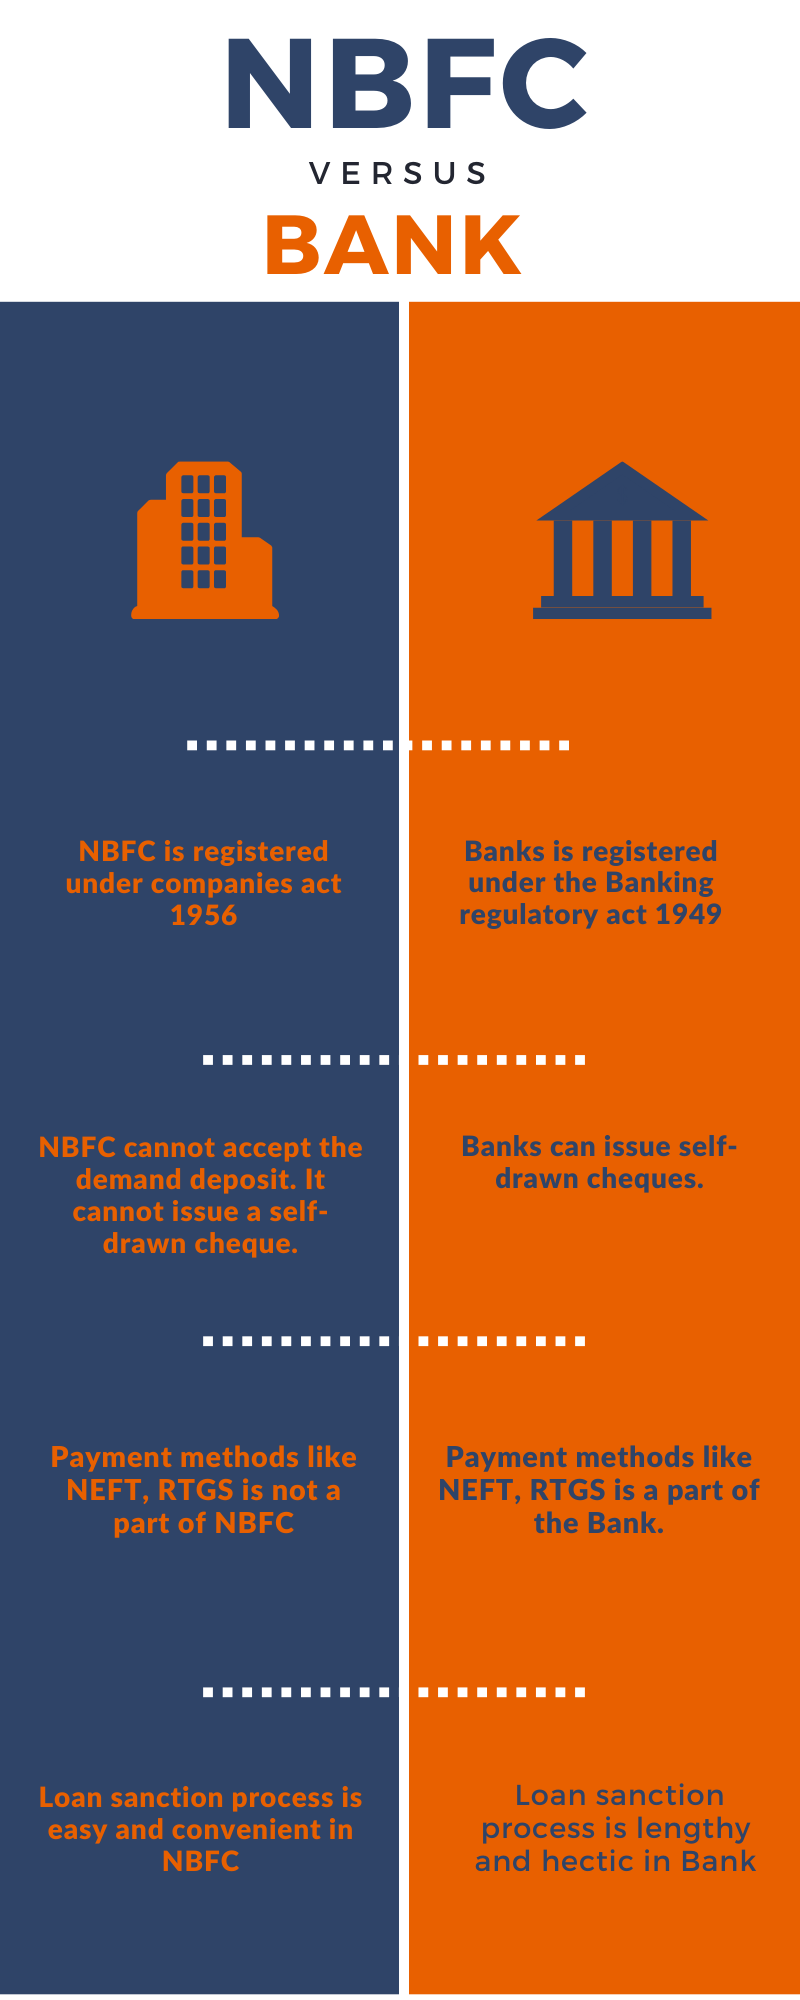 NBFC vs Bank comparison infographic